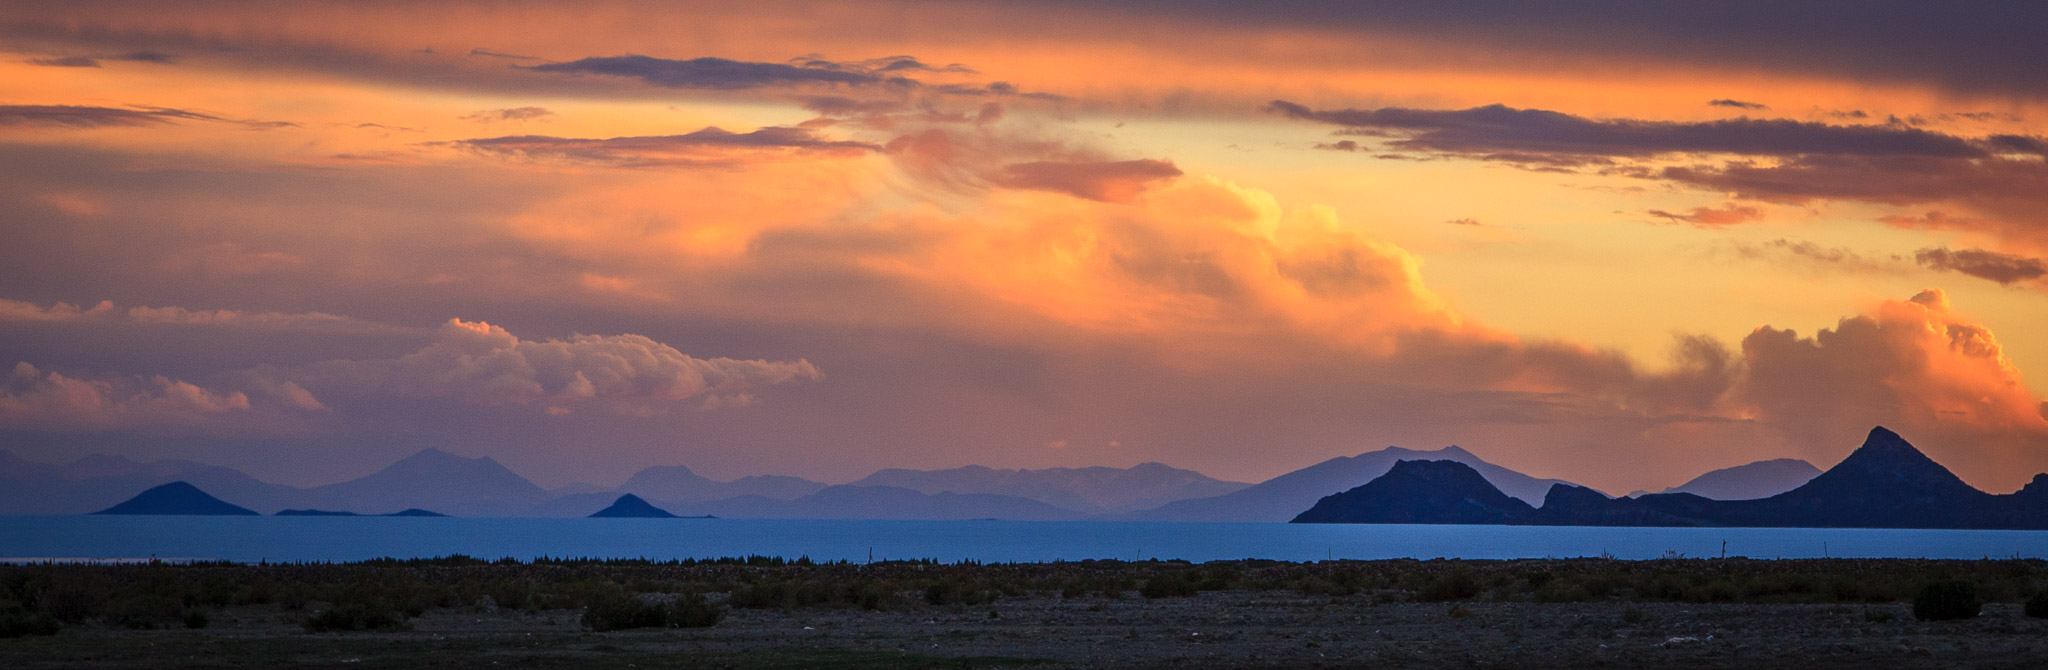 Salar de Uyuni sunset from Tahua